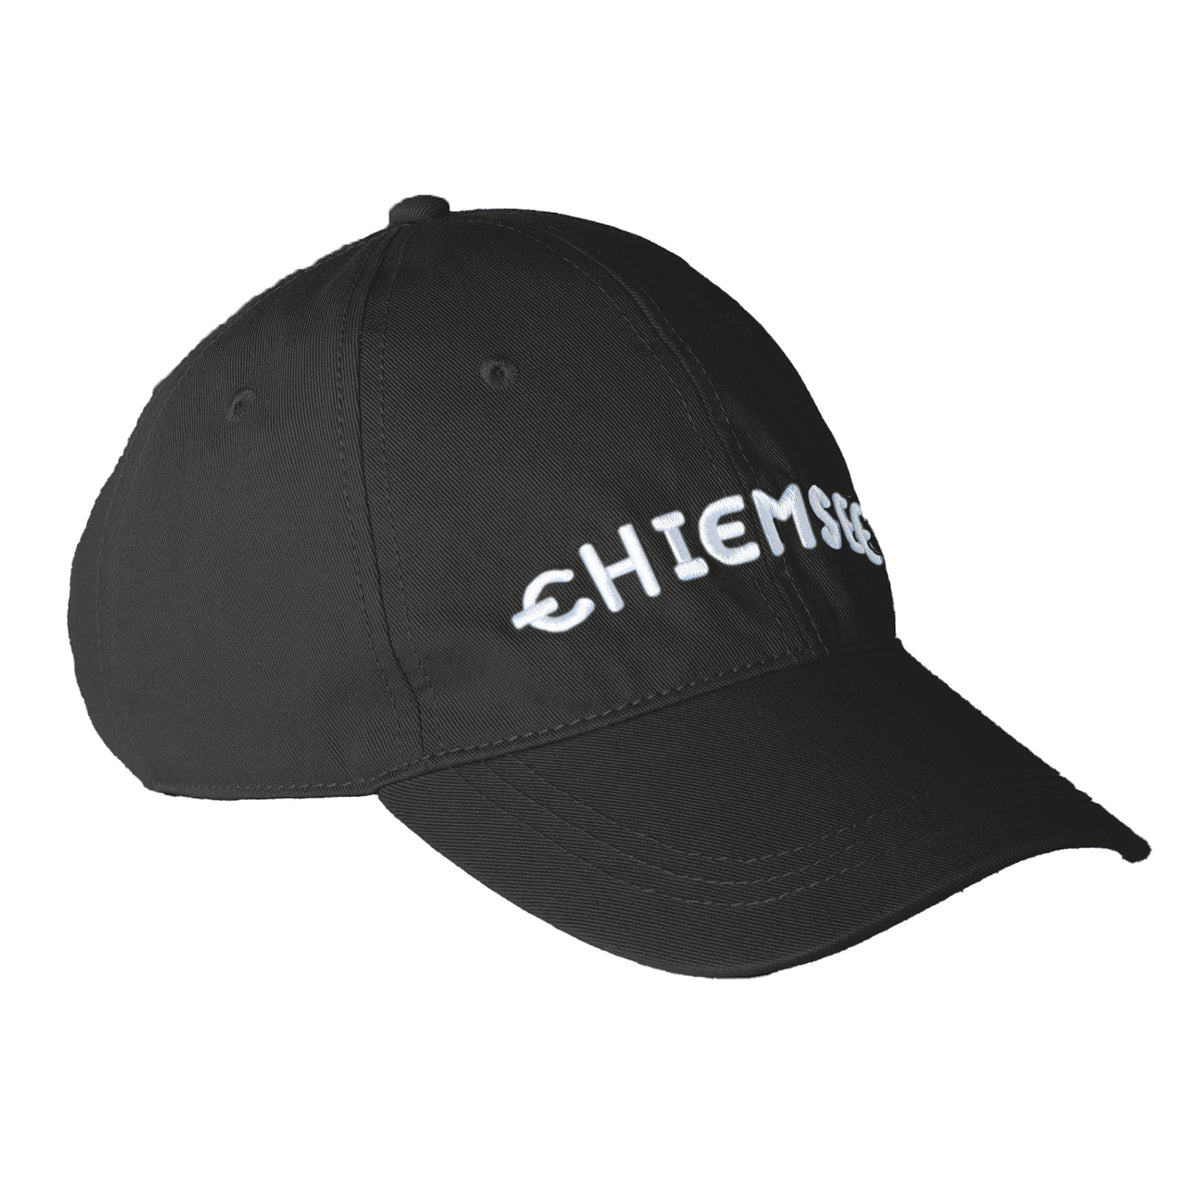 Chiemsee - Basecap